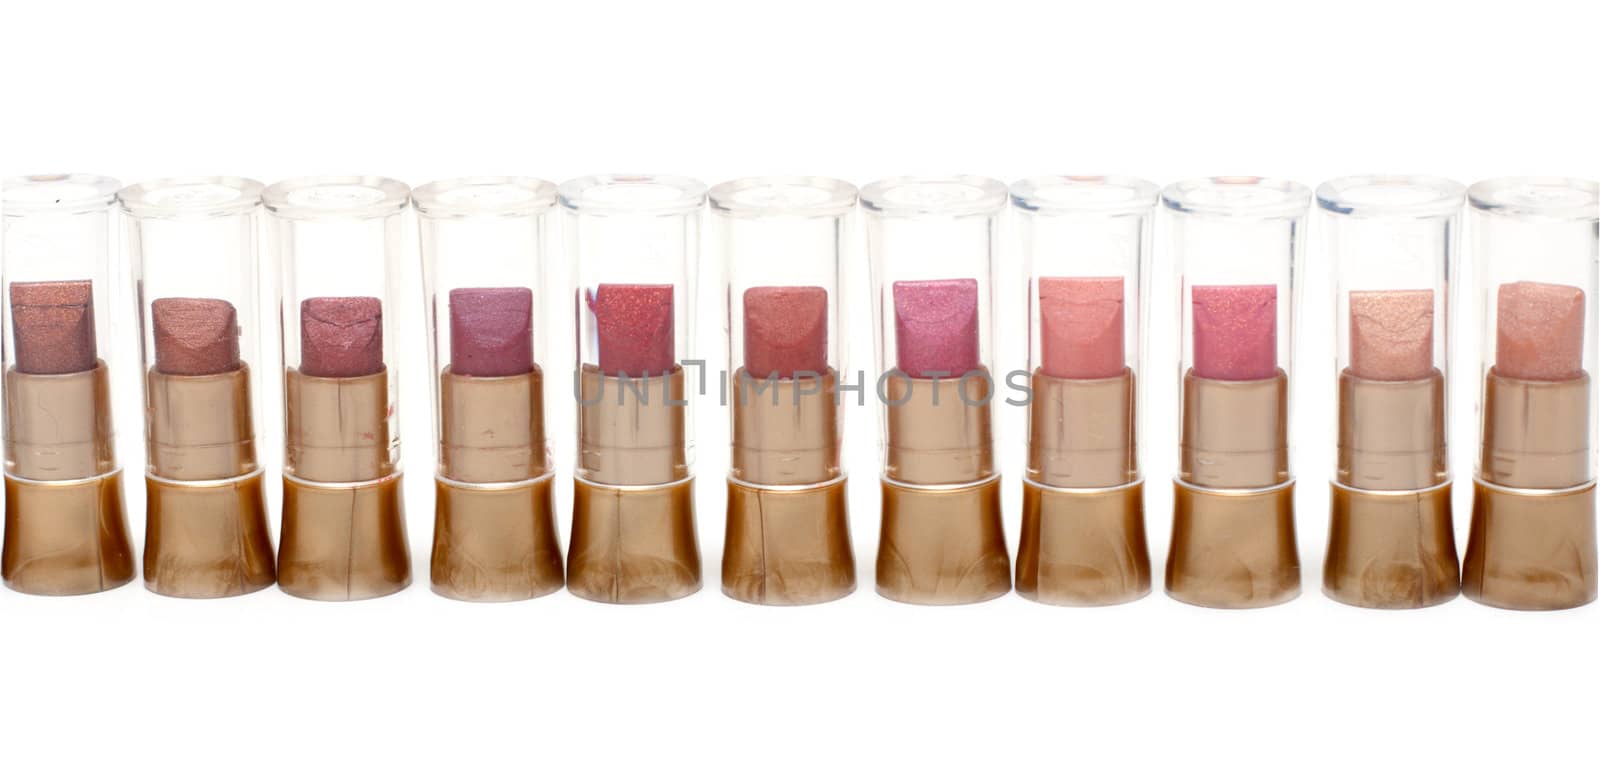 Lipstick in plastic case in line by RuslanOmega